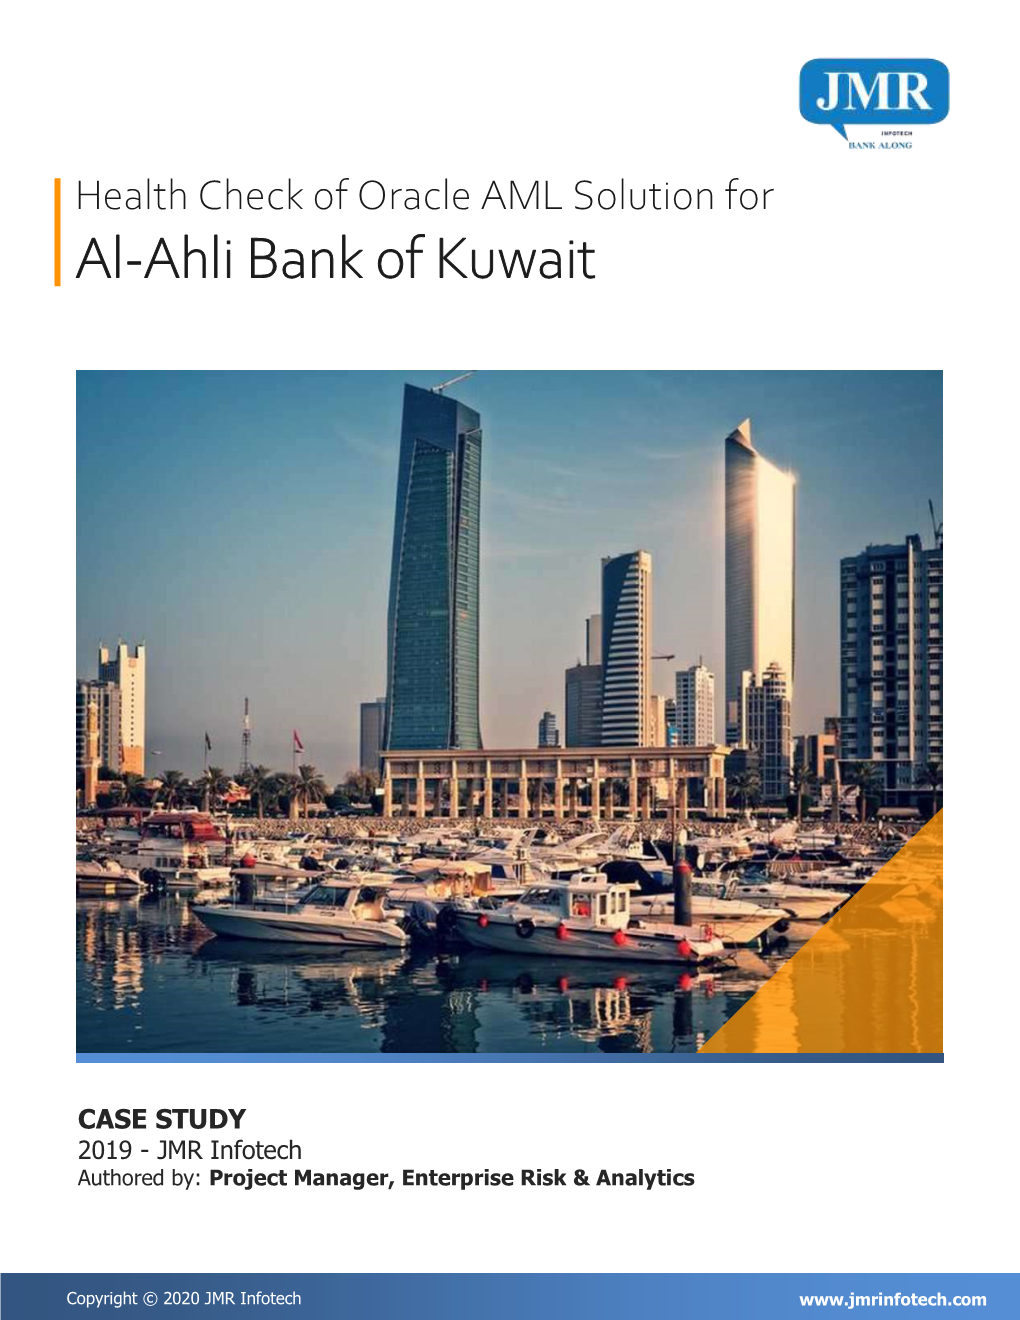 Al-Ahli Bank of Kuwait